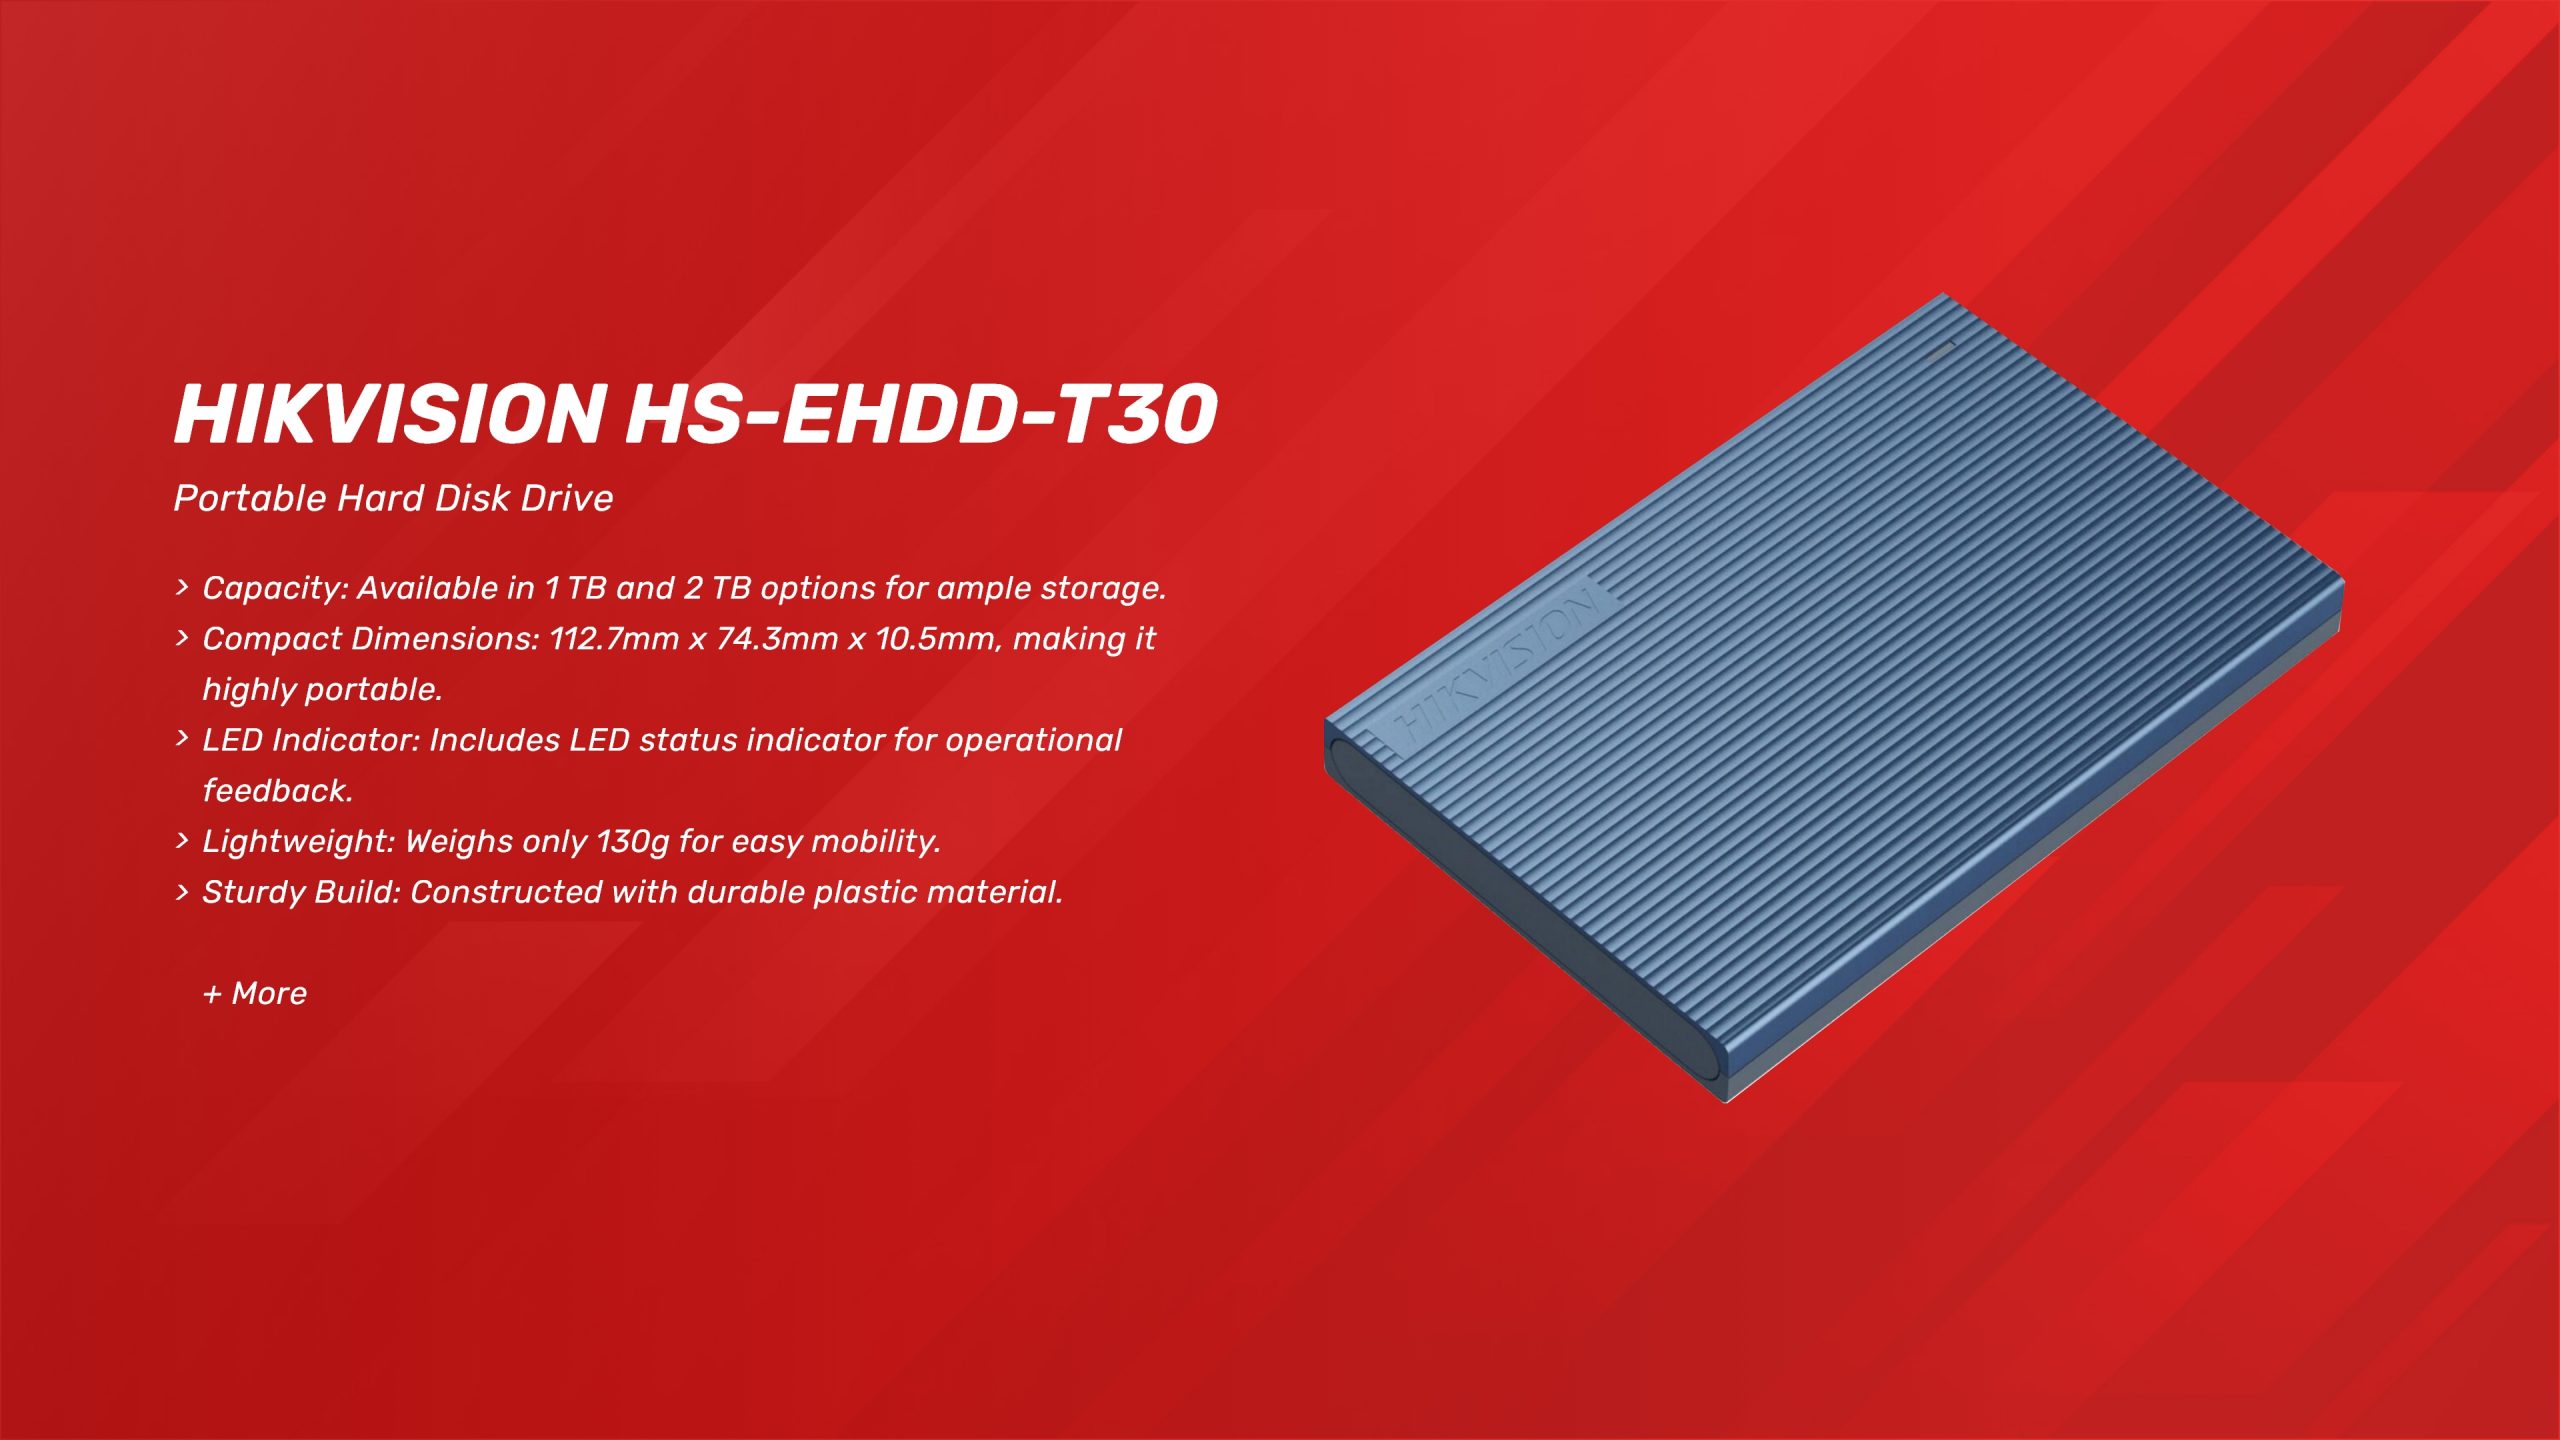 Hikvision HS-EHDD-T30